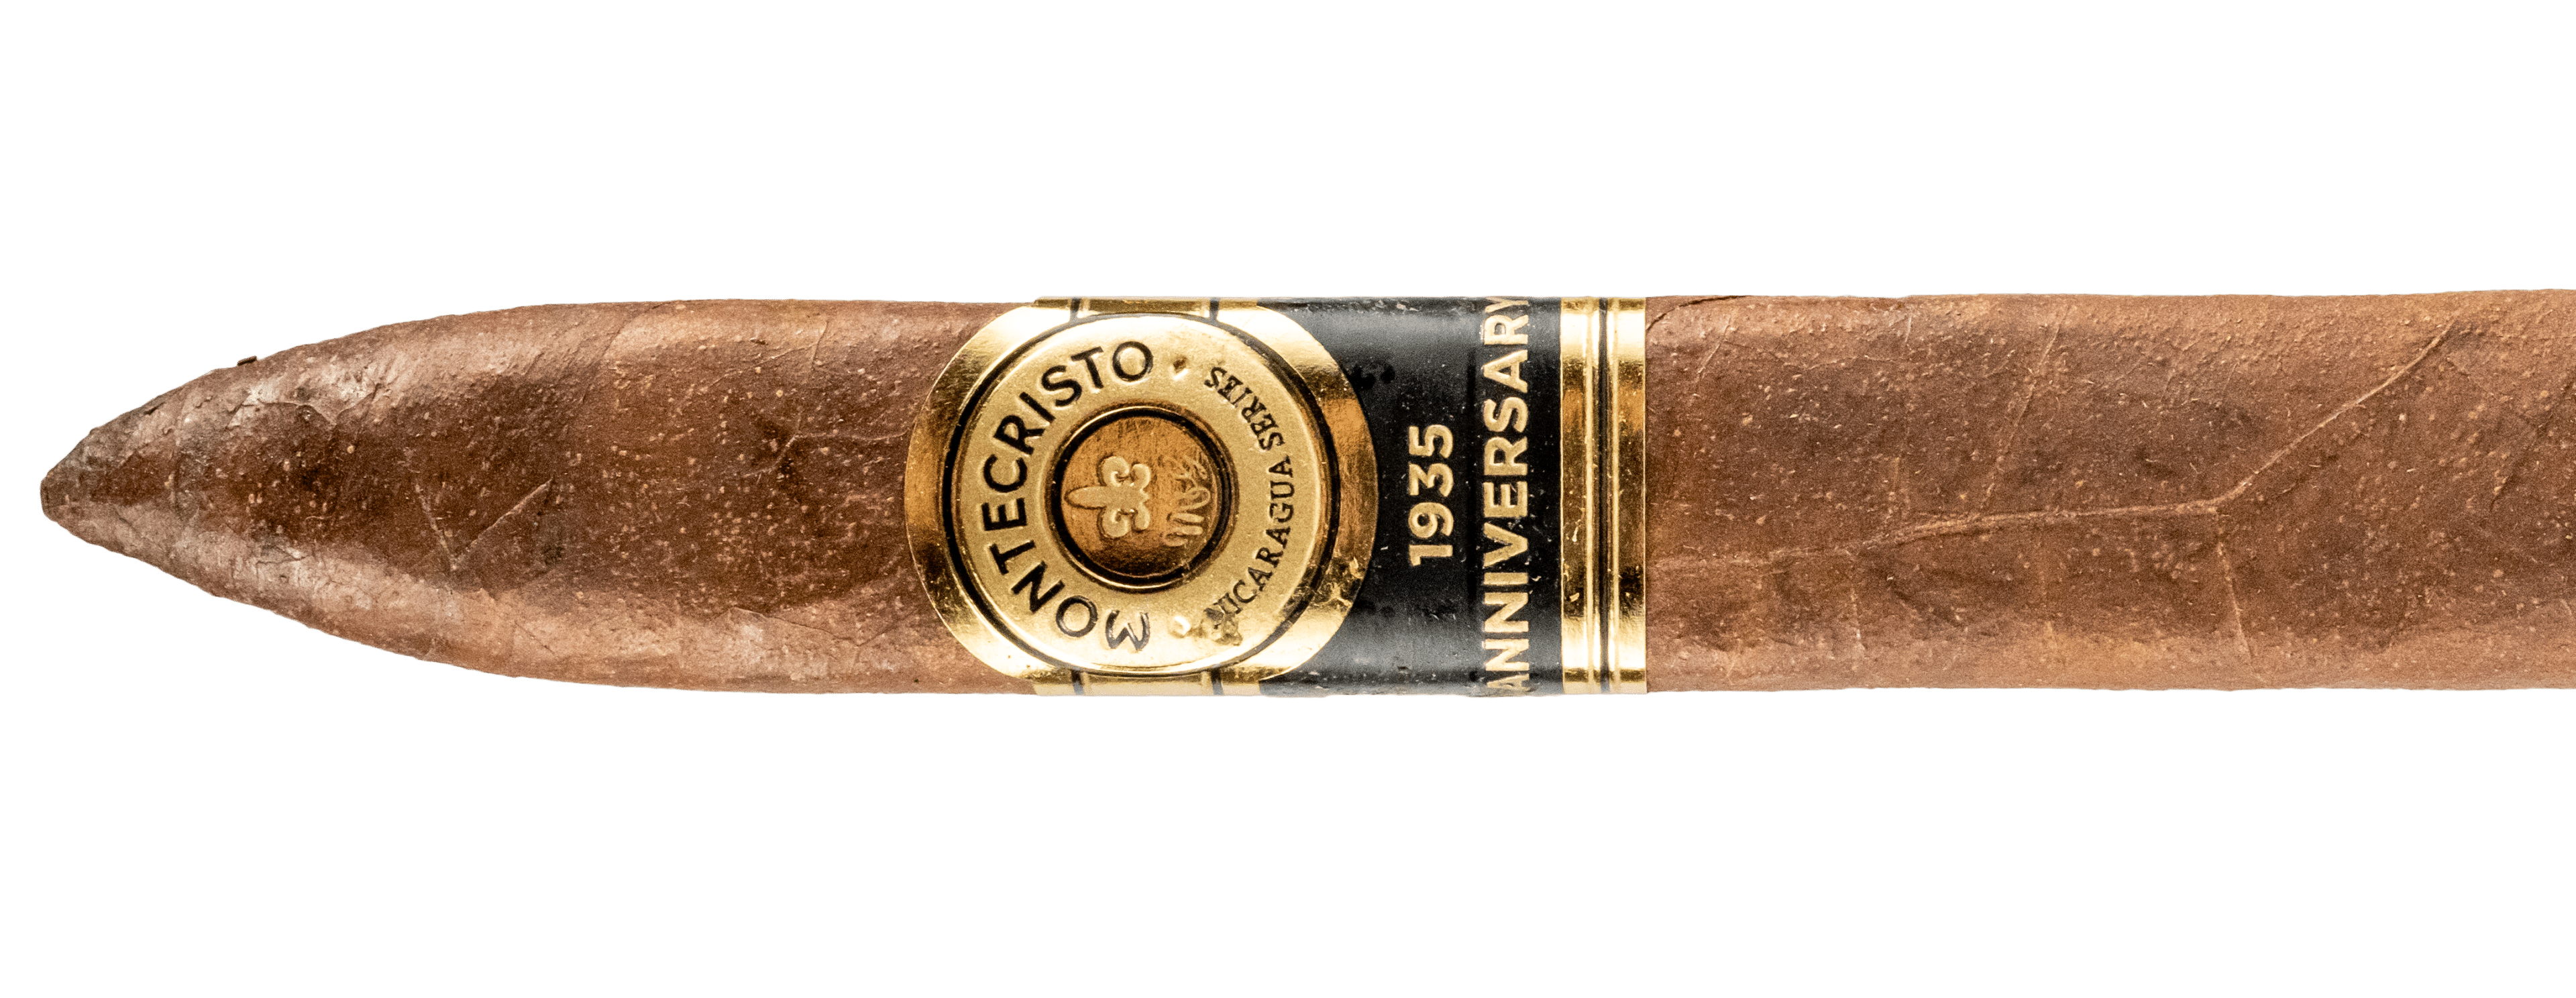 Montecristo 1935 Anniversary Nicaragua No. 2 - Blind Cigar Review